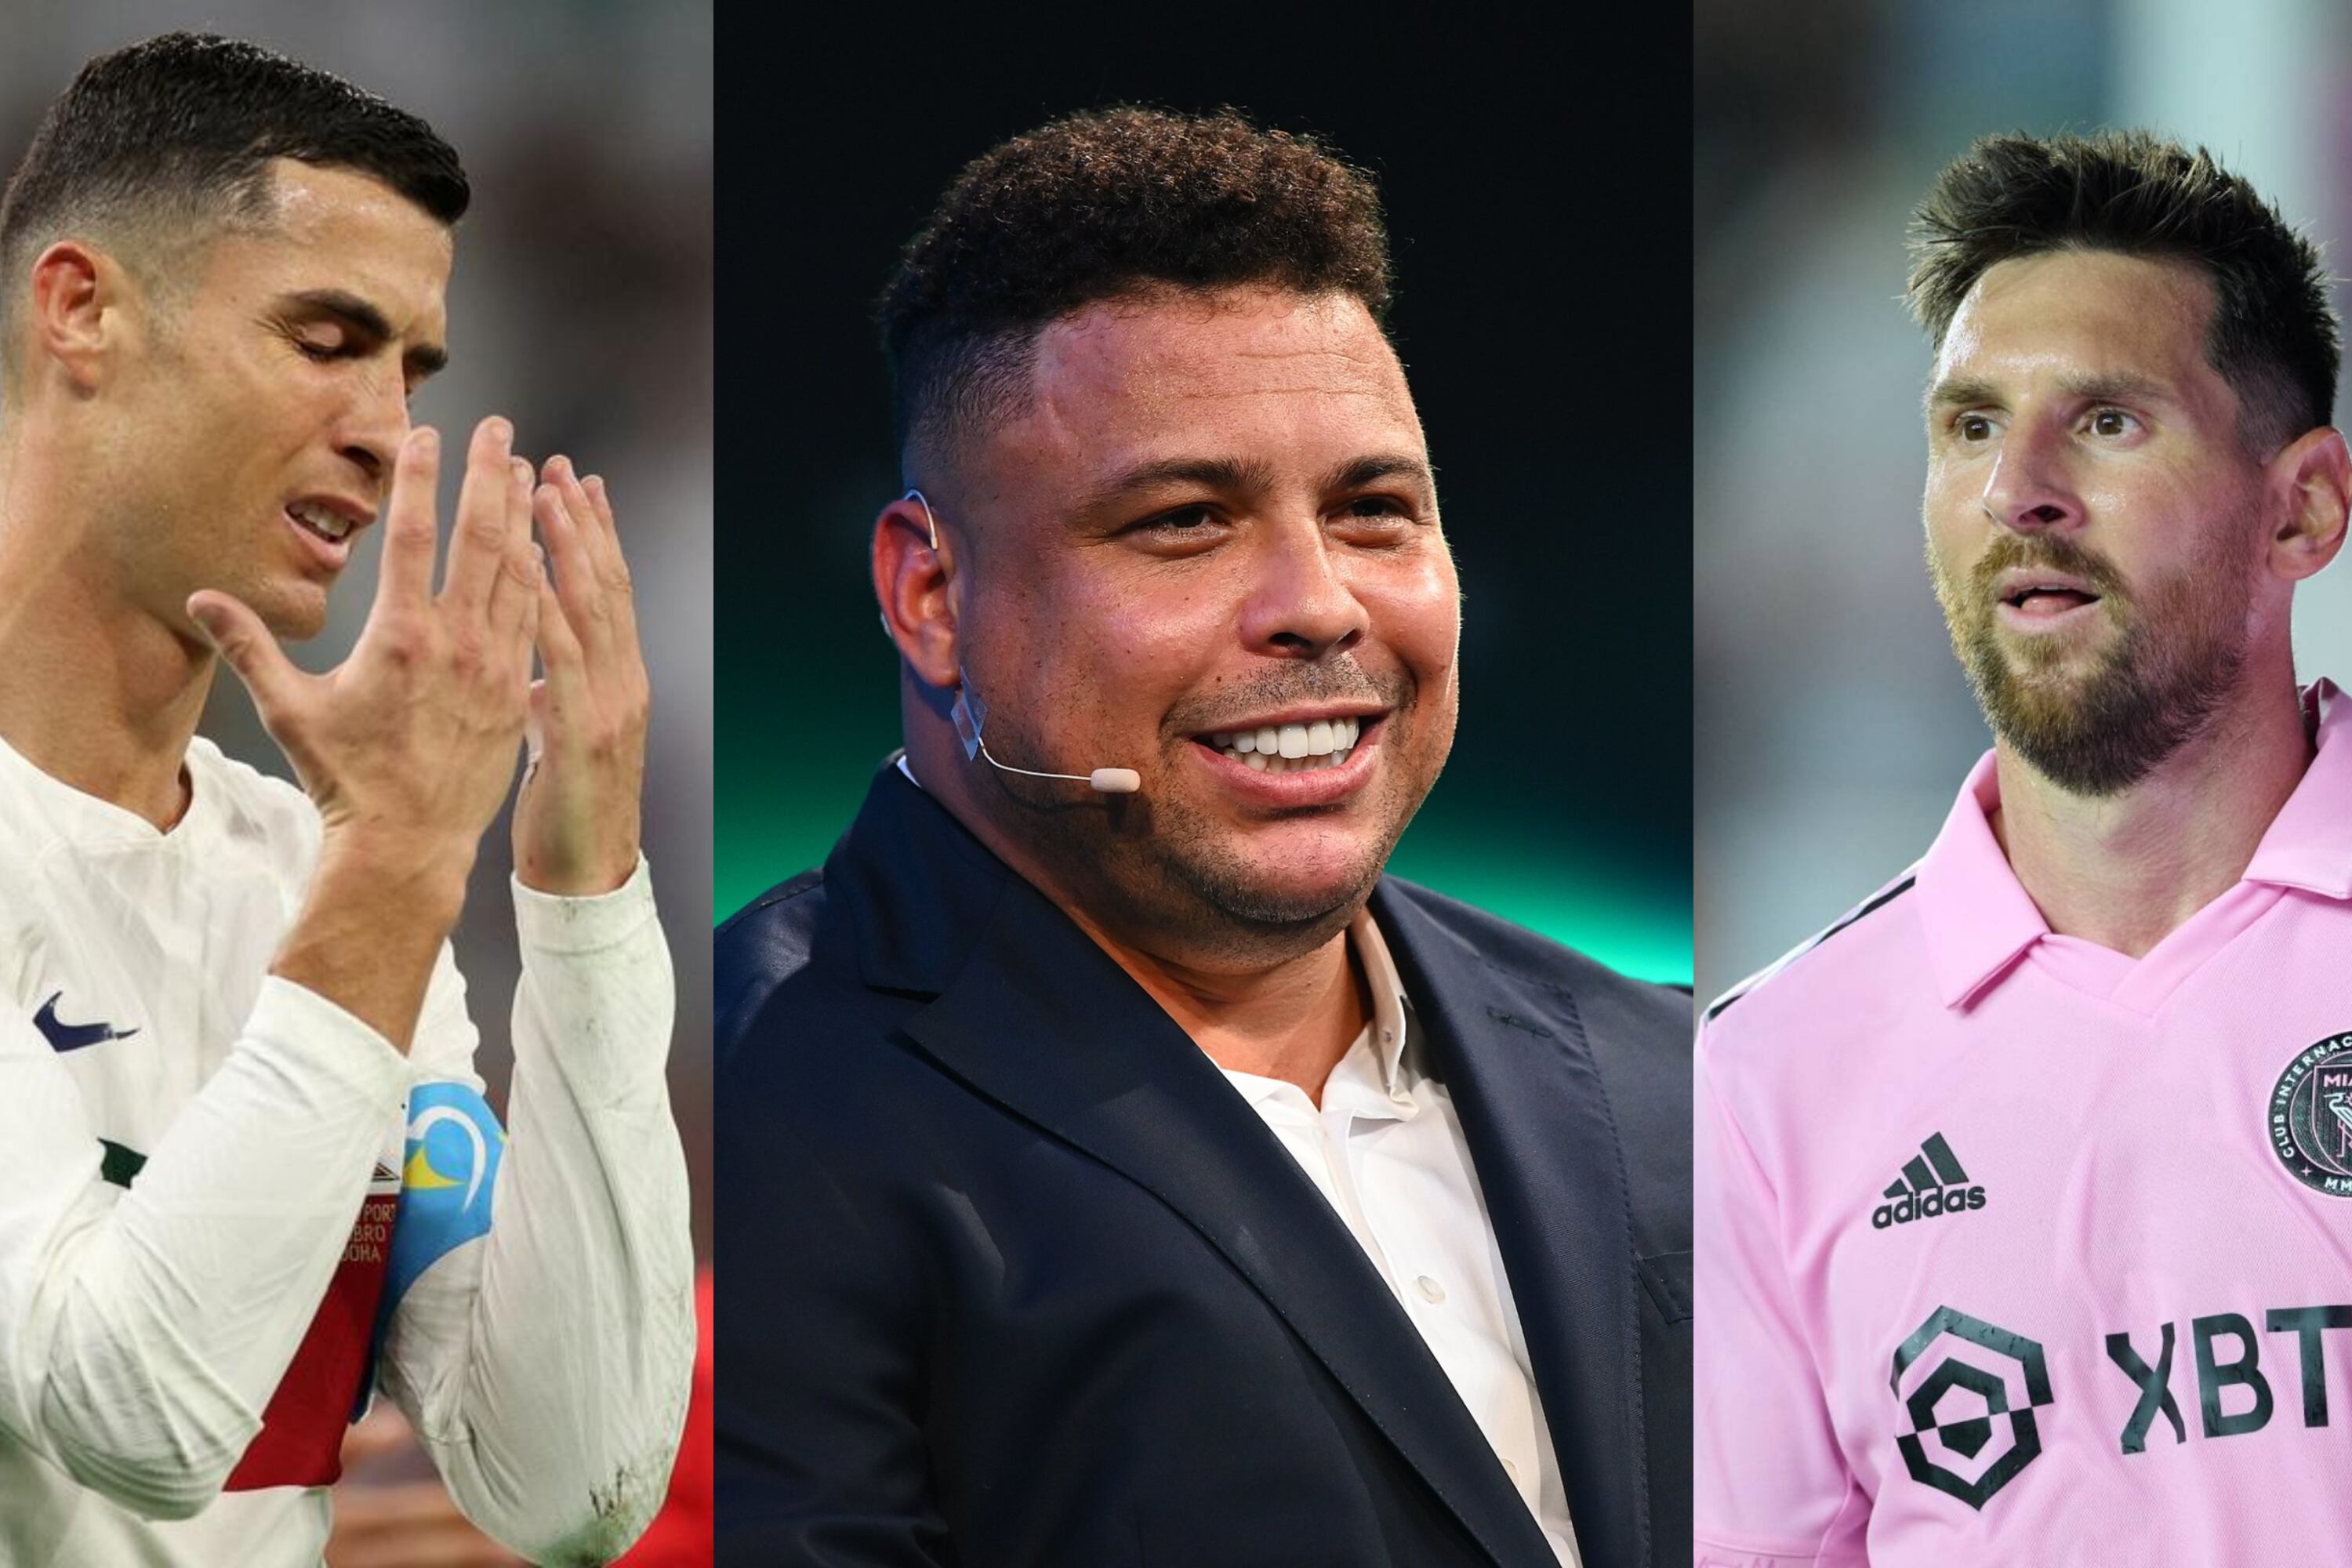 Ronaldo Nazario chooses the best between Cristiano Ronaldo and Messi and shocks